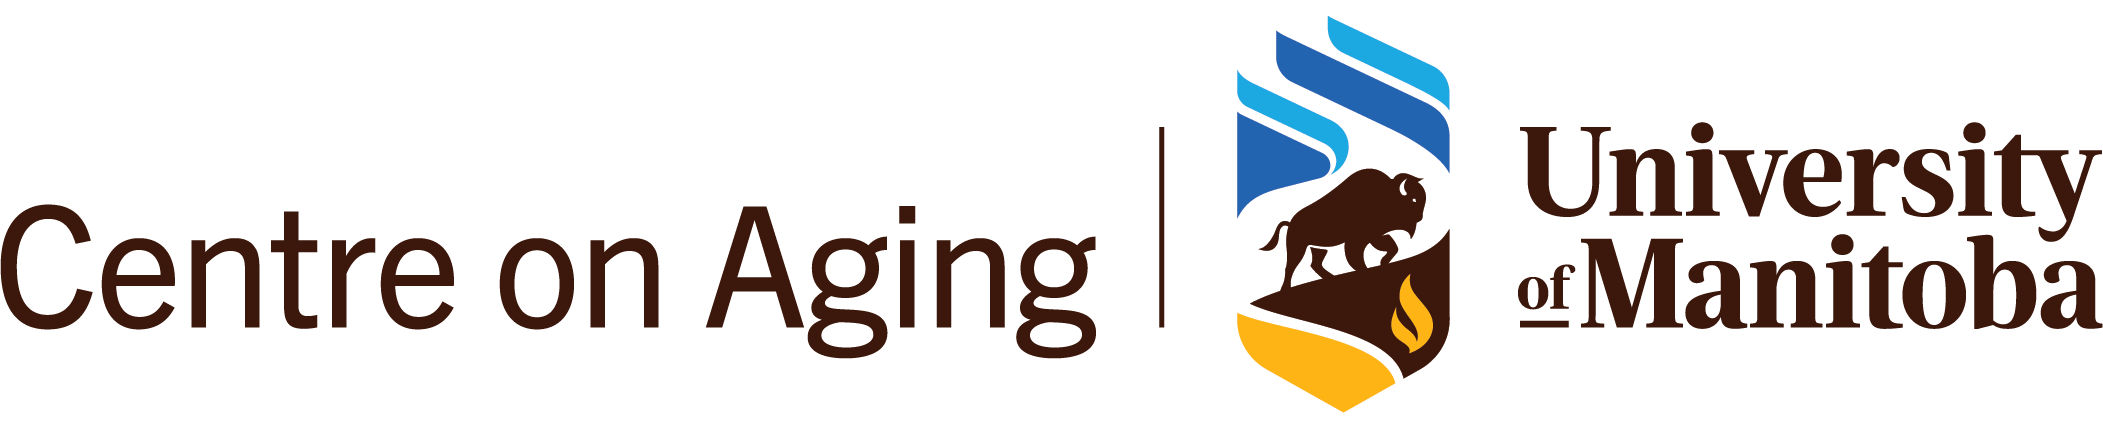 University of Manitoba Centre on Aging Logo